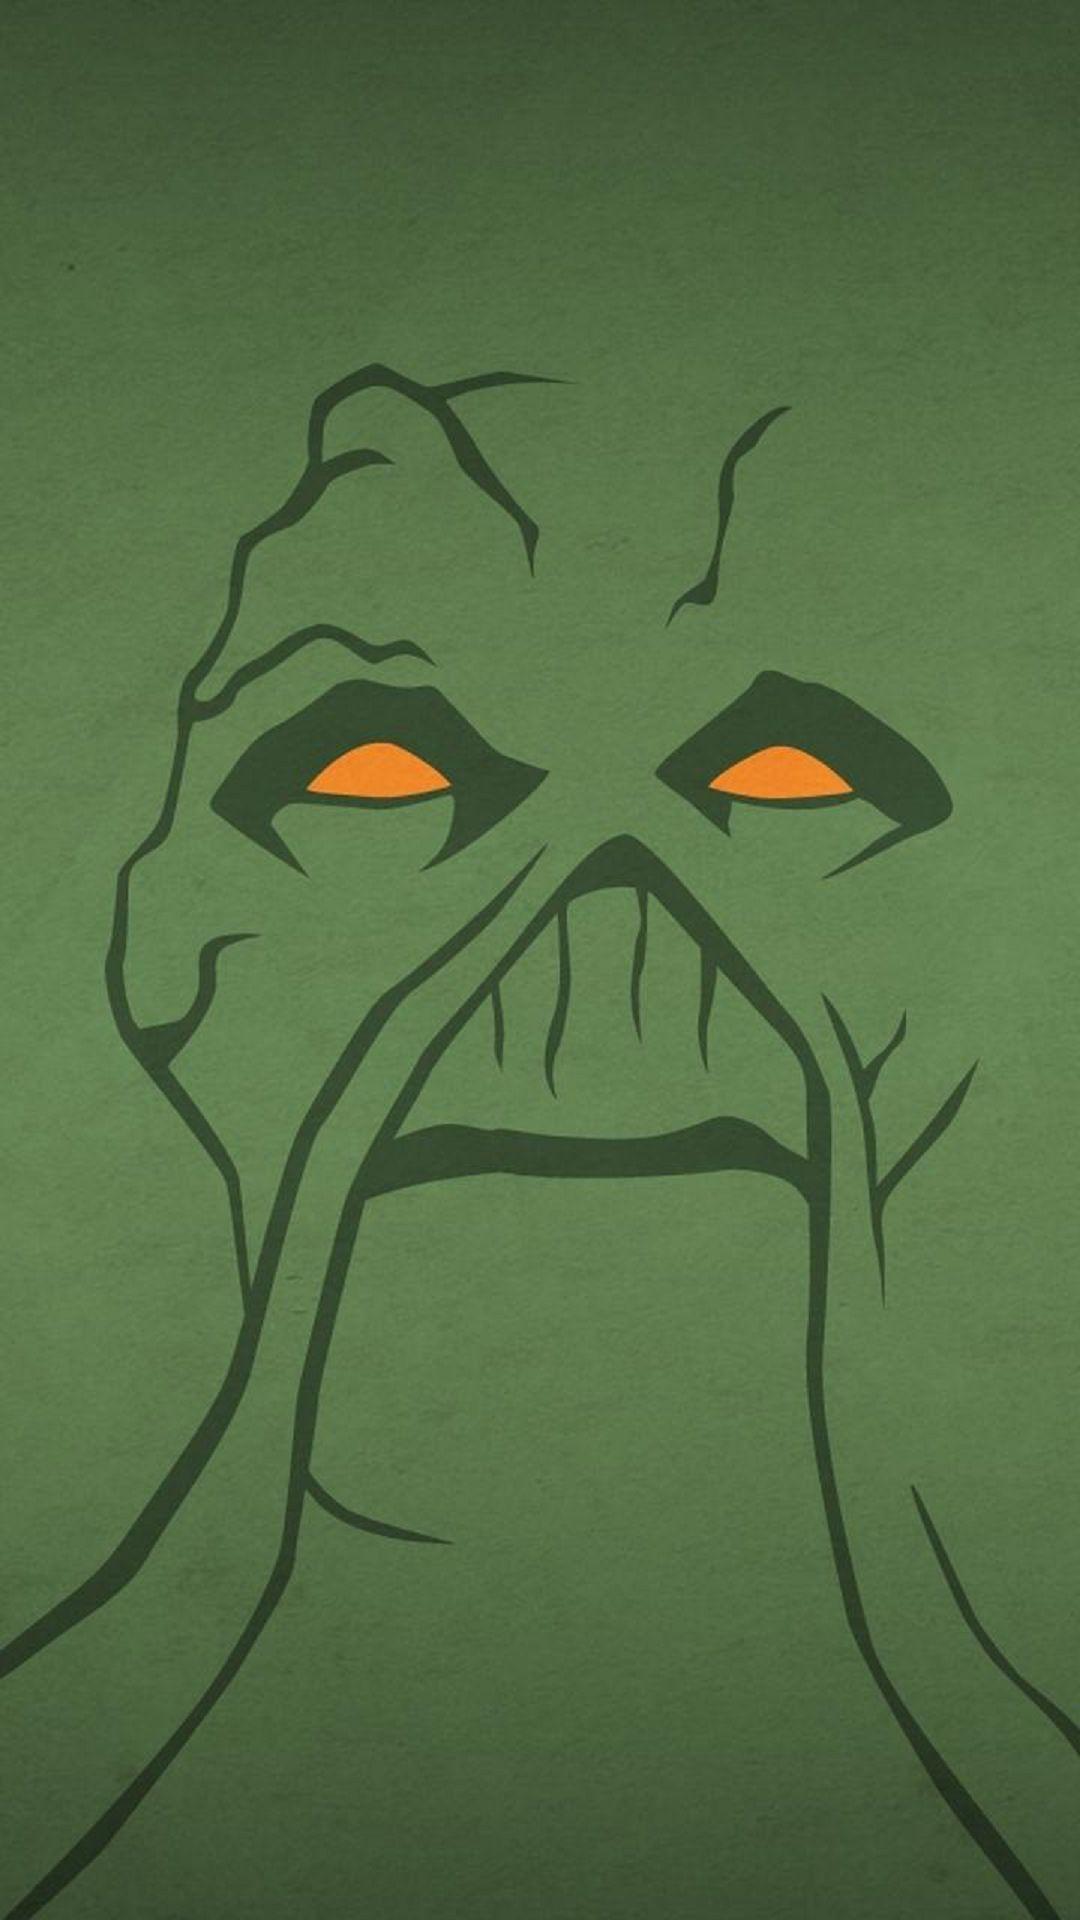 Wallpaper for android Cartoon Best Of Minimalist Superhero Swamp